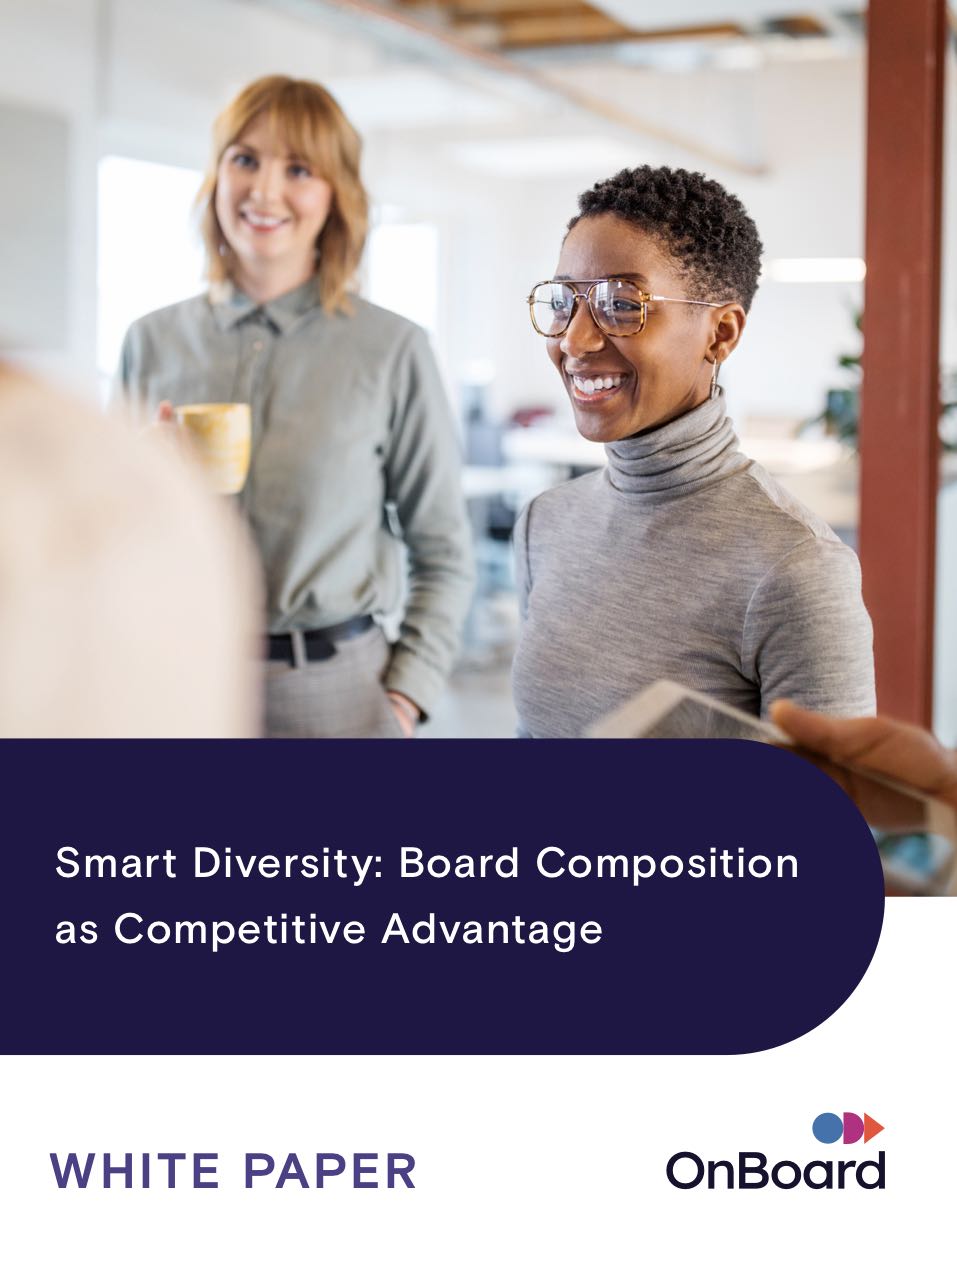 Smart Diversity & Board Composition